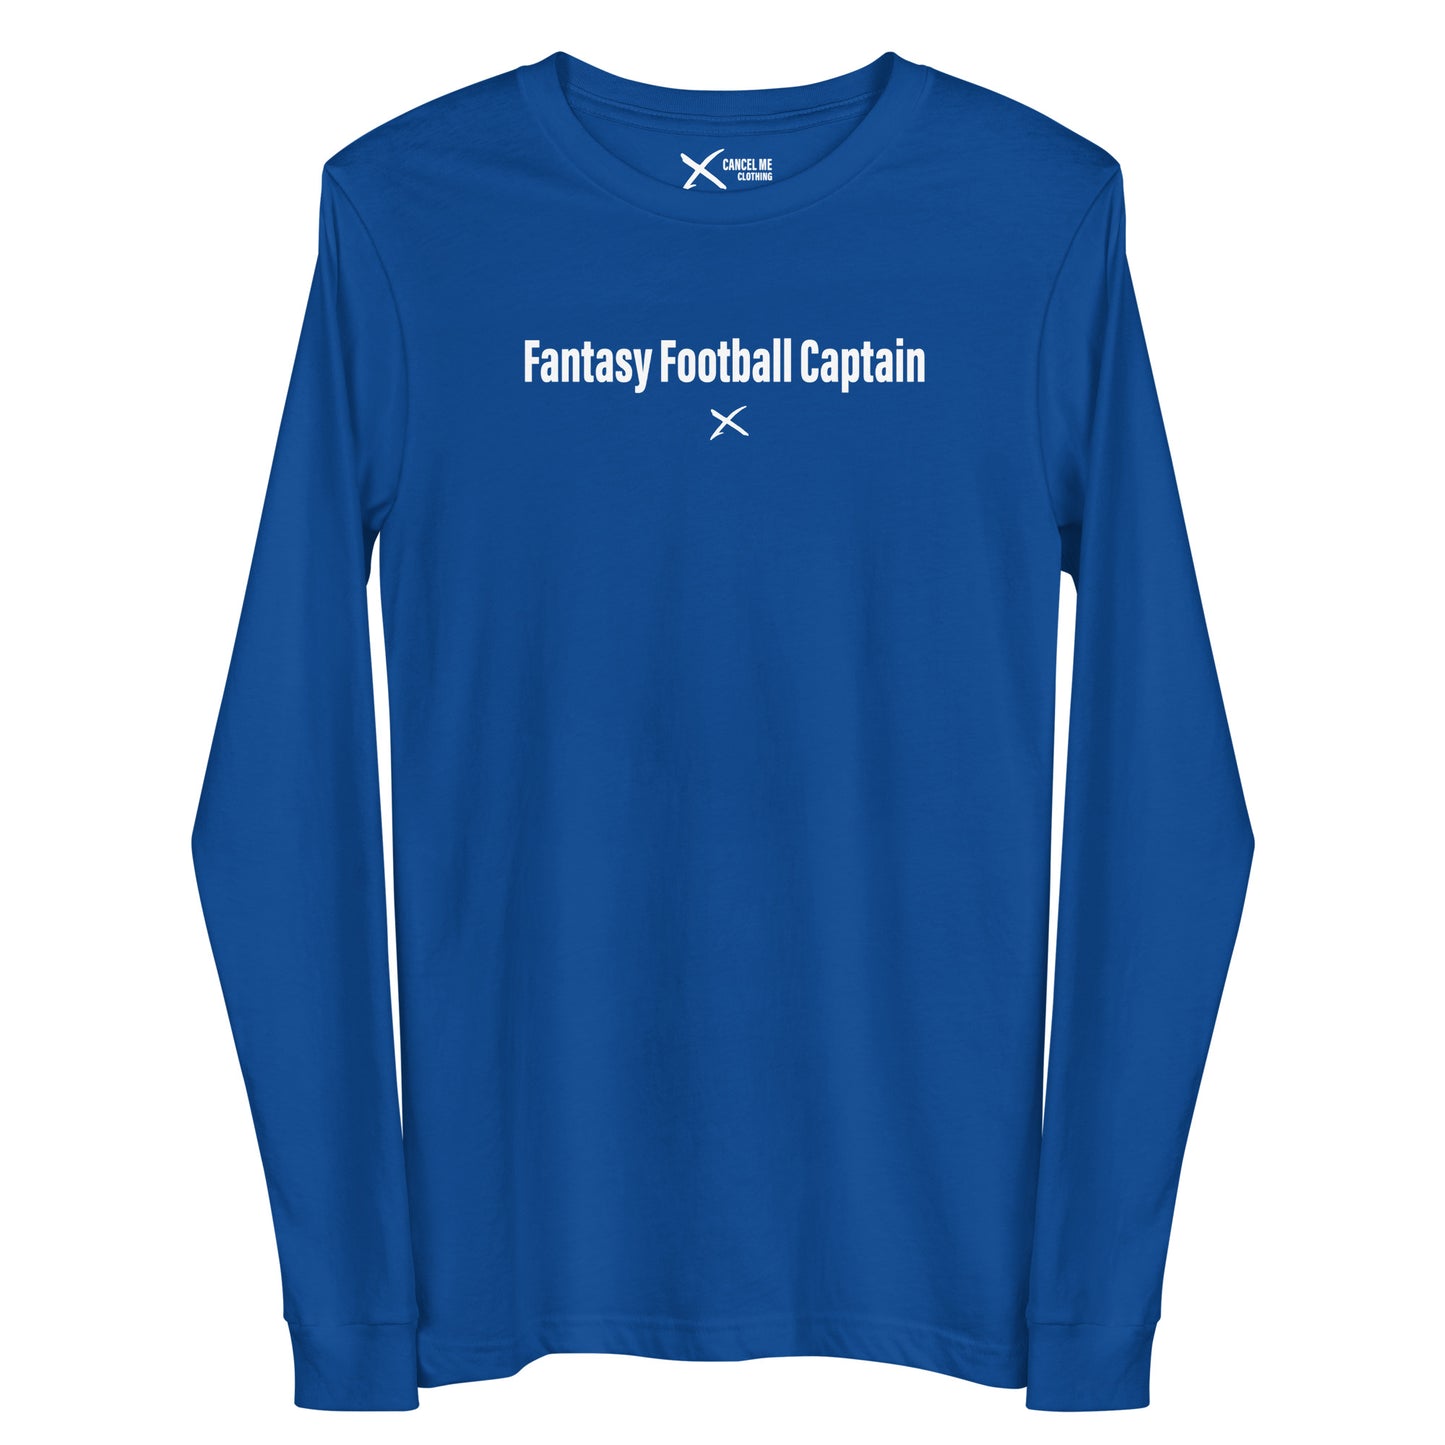 Fantasy Football Captain - Longsleeve